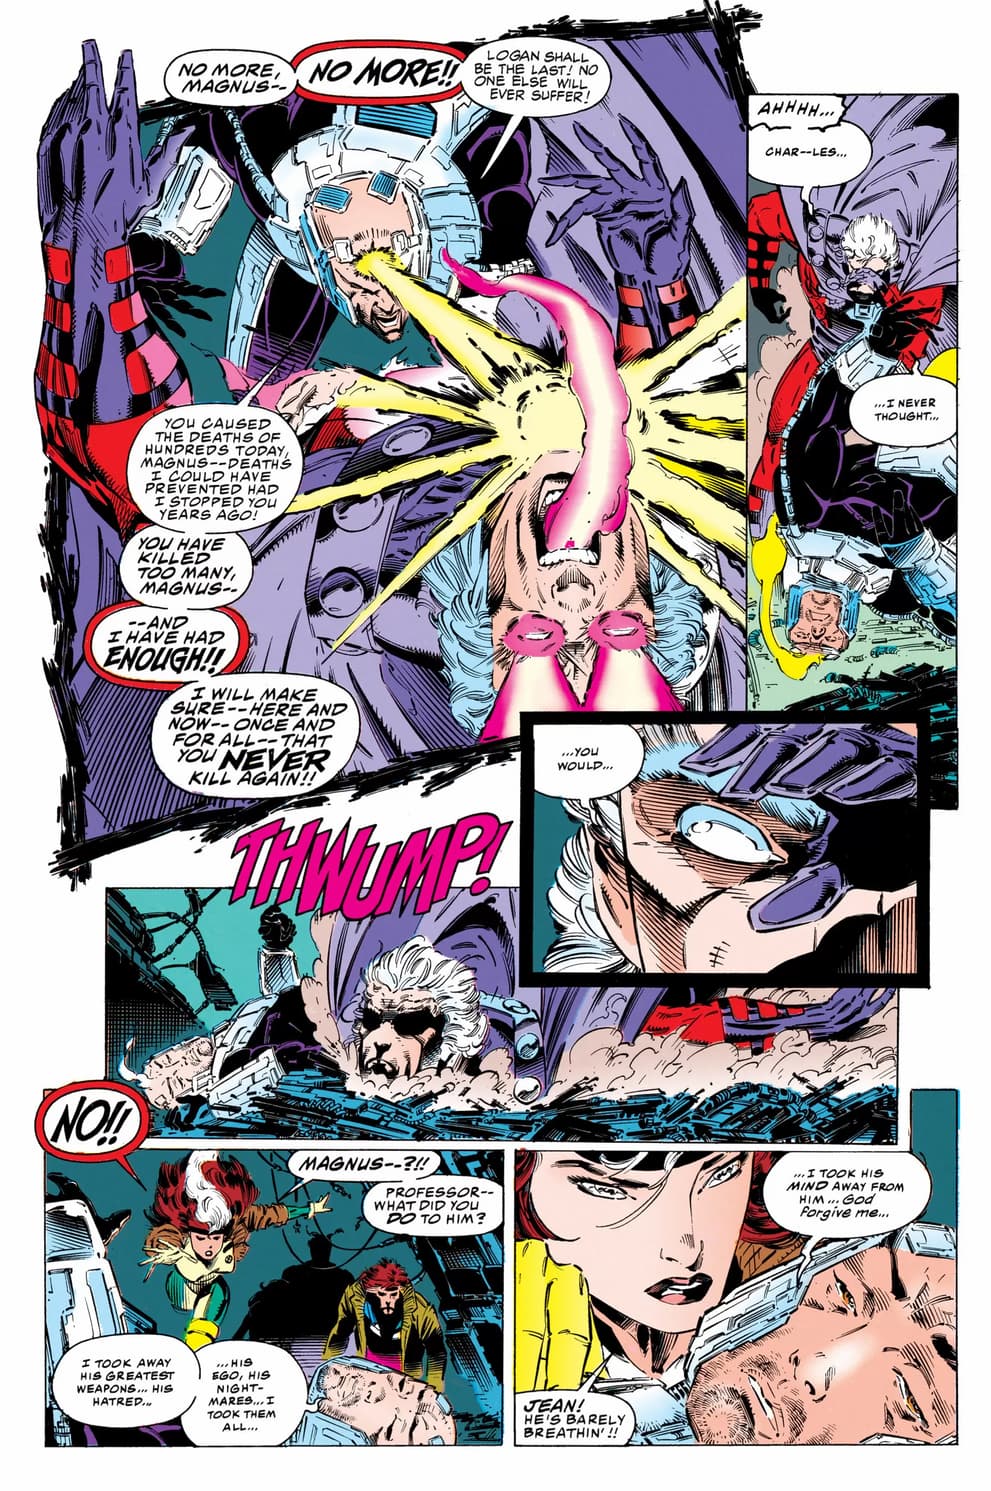 X-MEN (1991) #25 artwork by Andy Kubert, Matt Ryan, and Joe Rosas